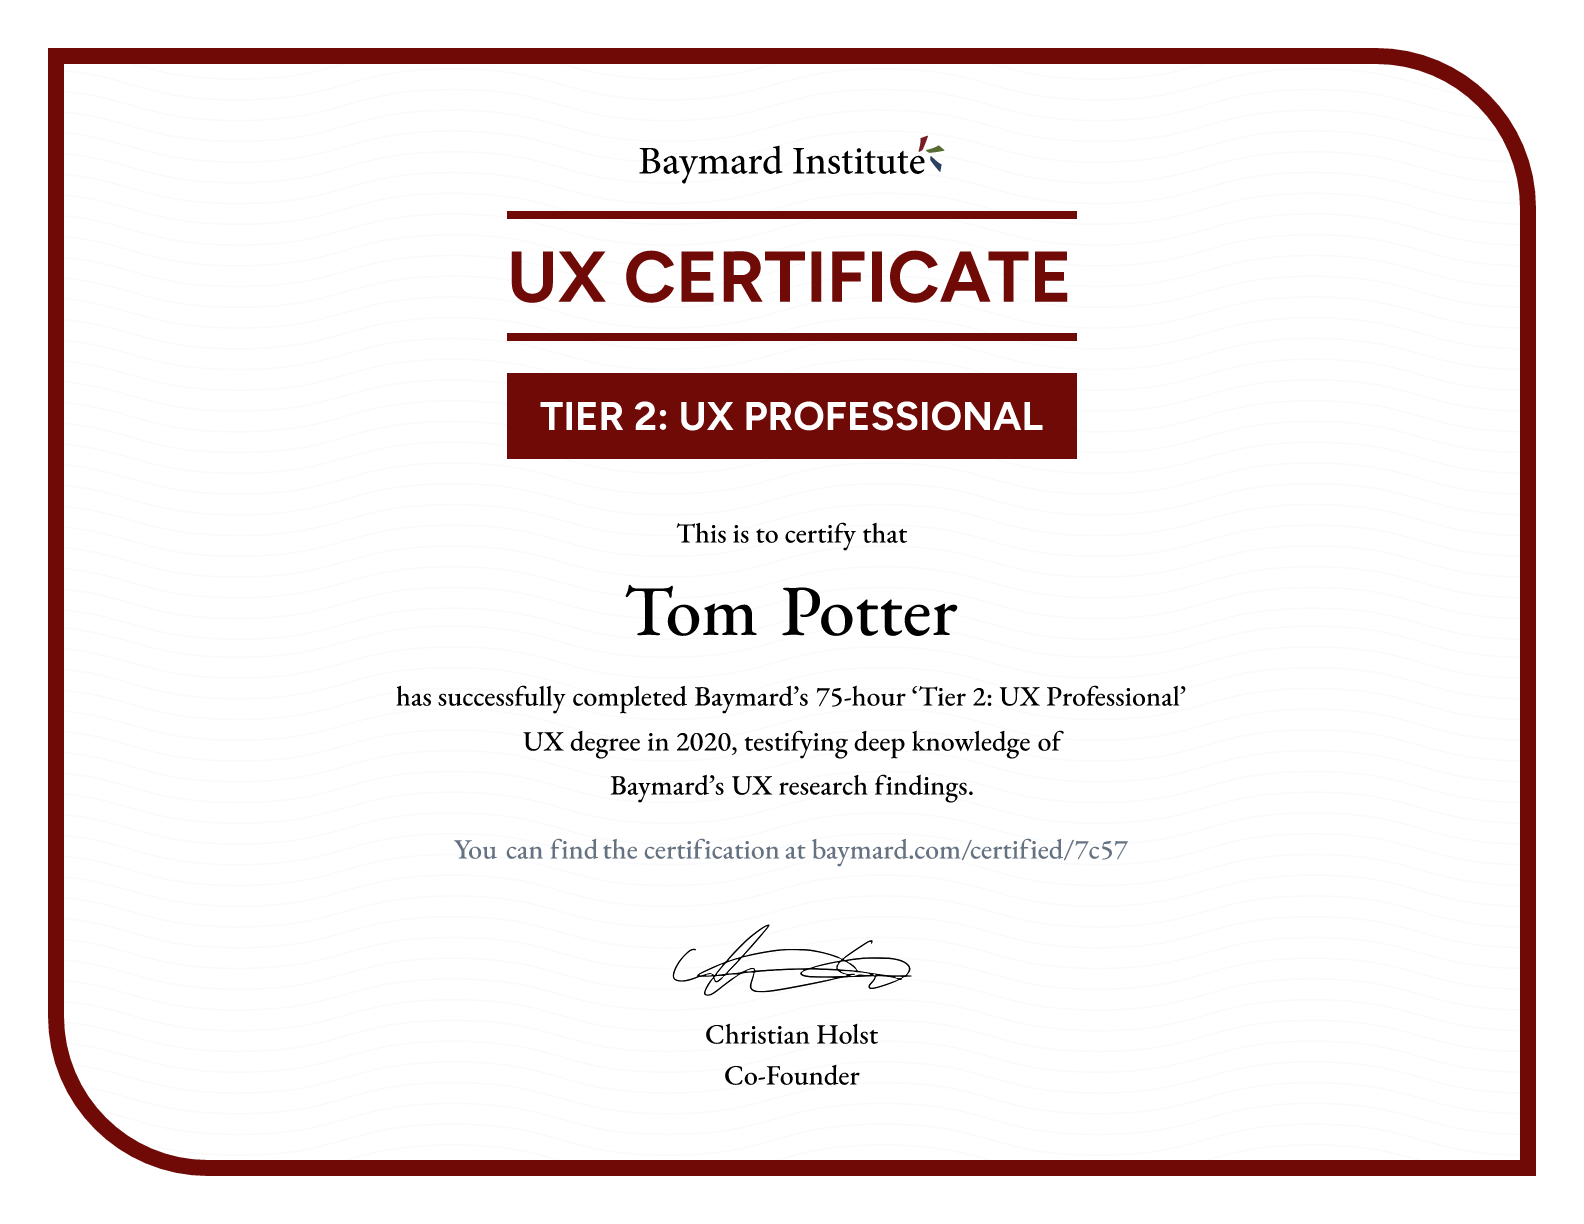 Tom Potter’s certificate